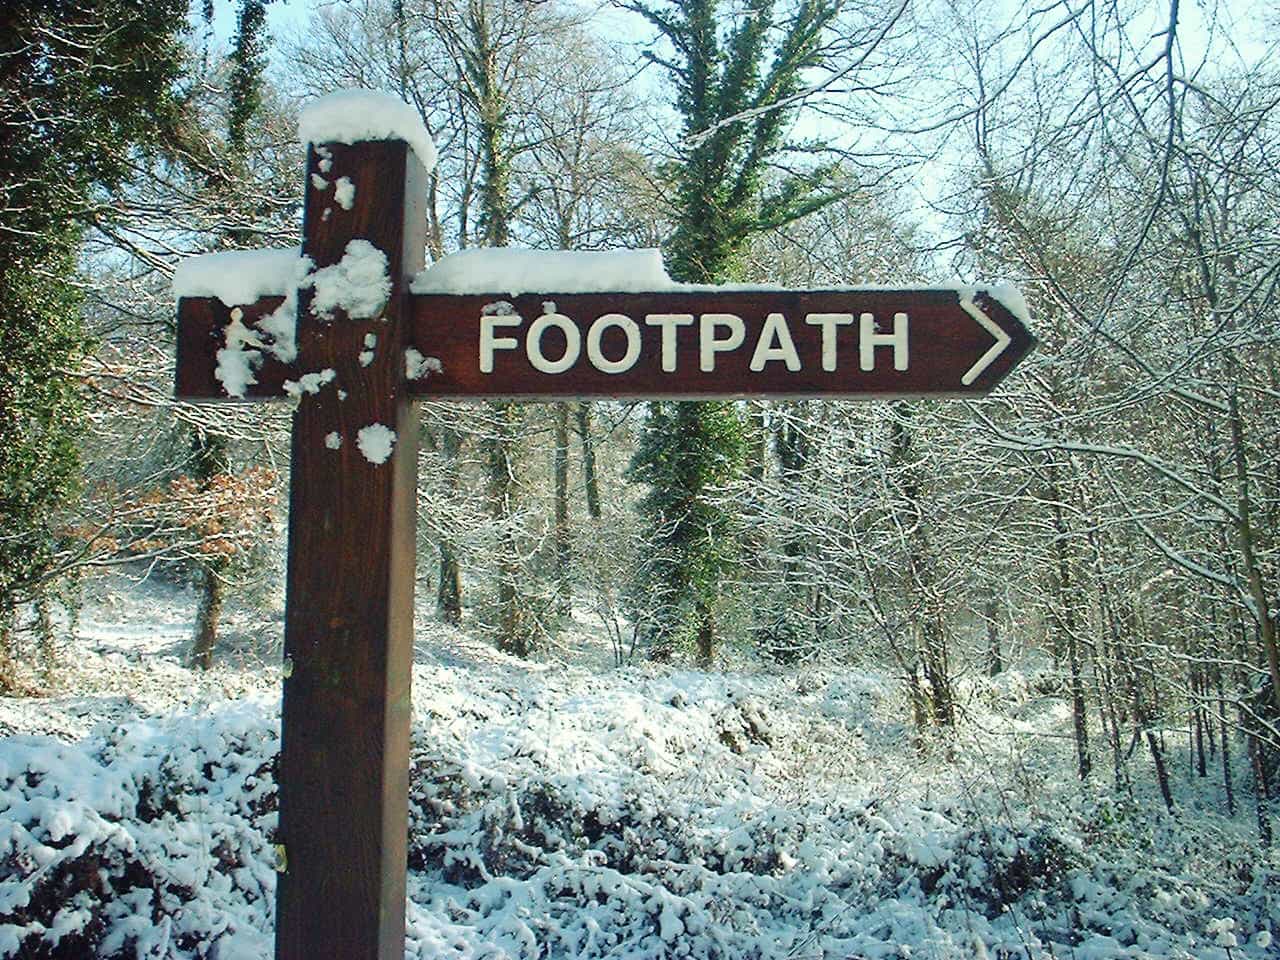 Footpath signpost in winter